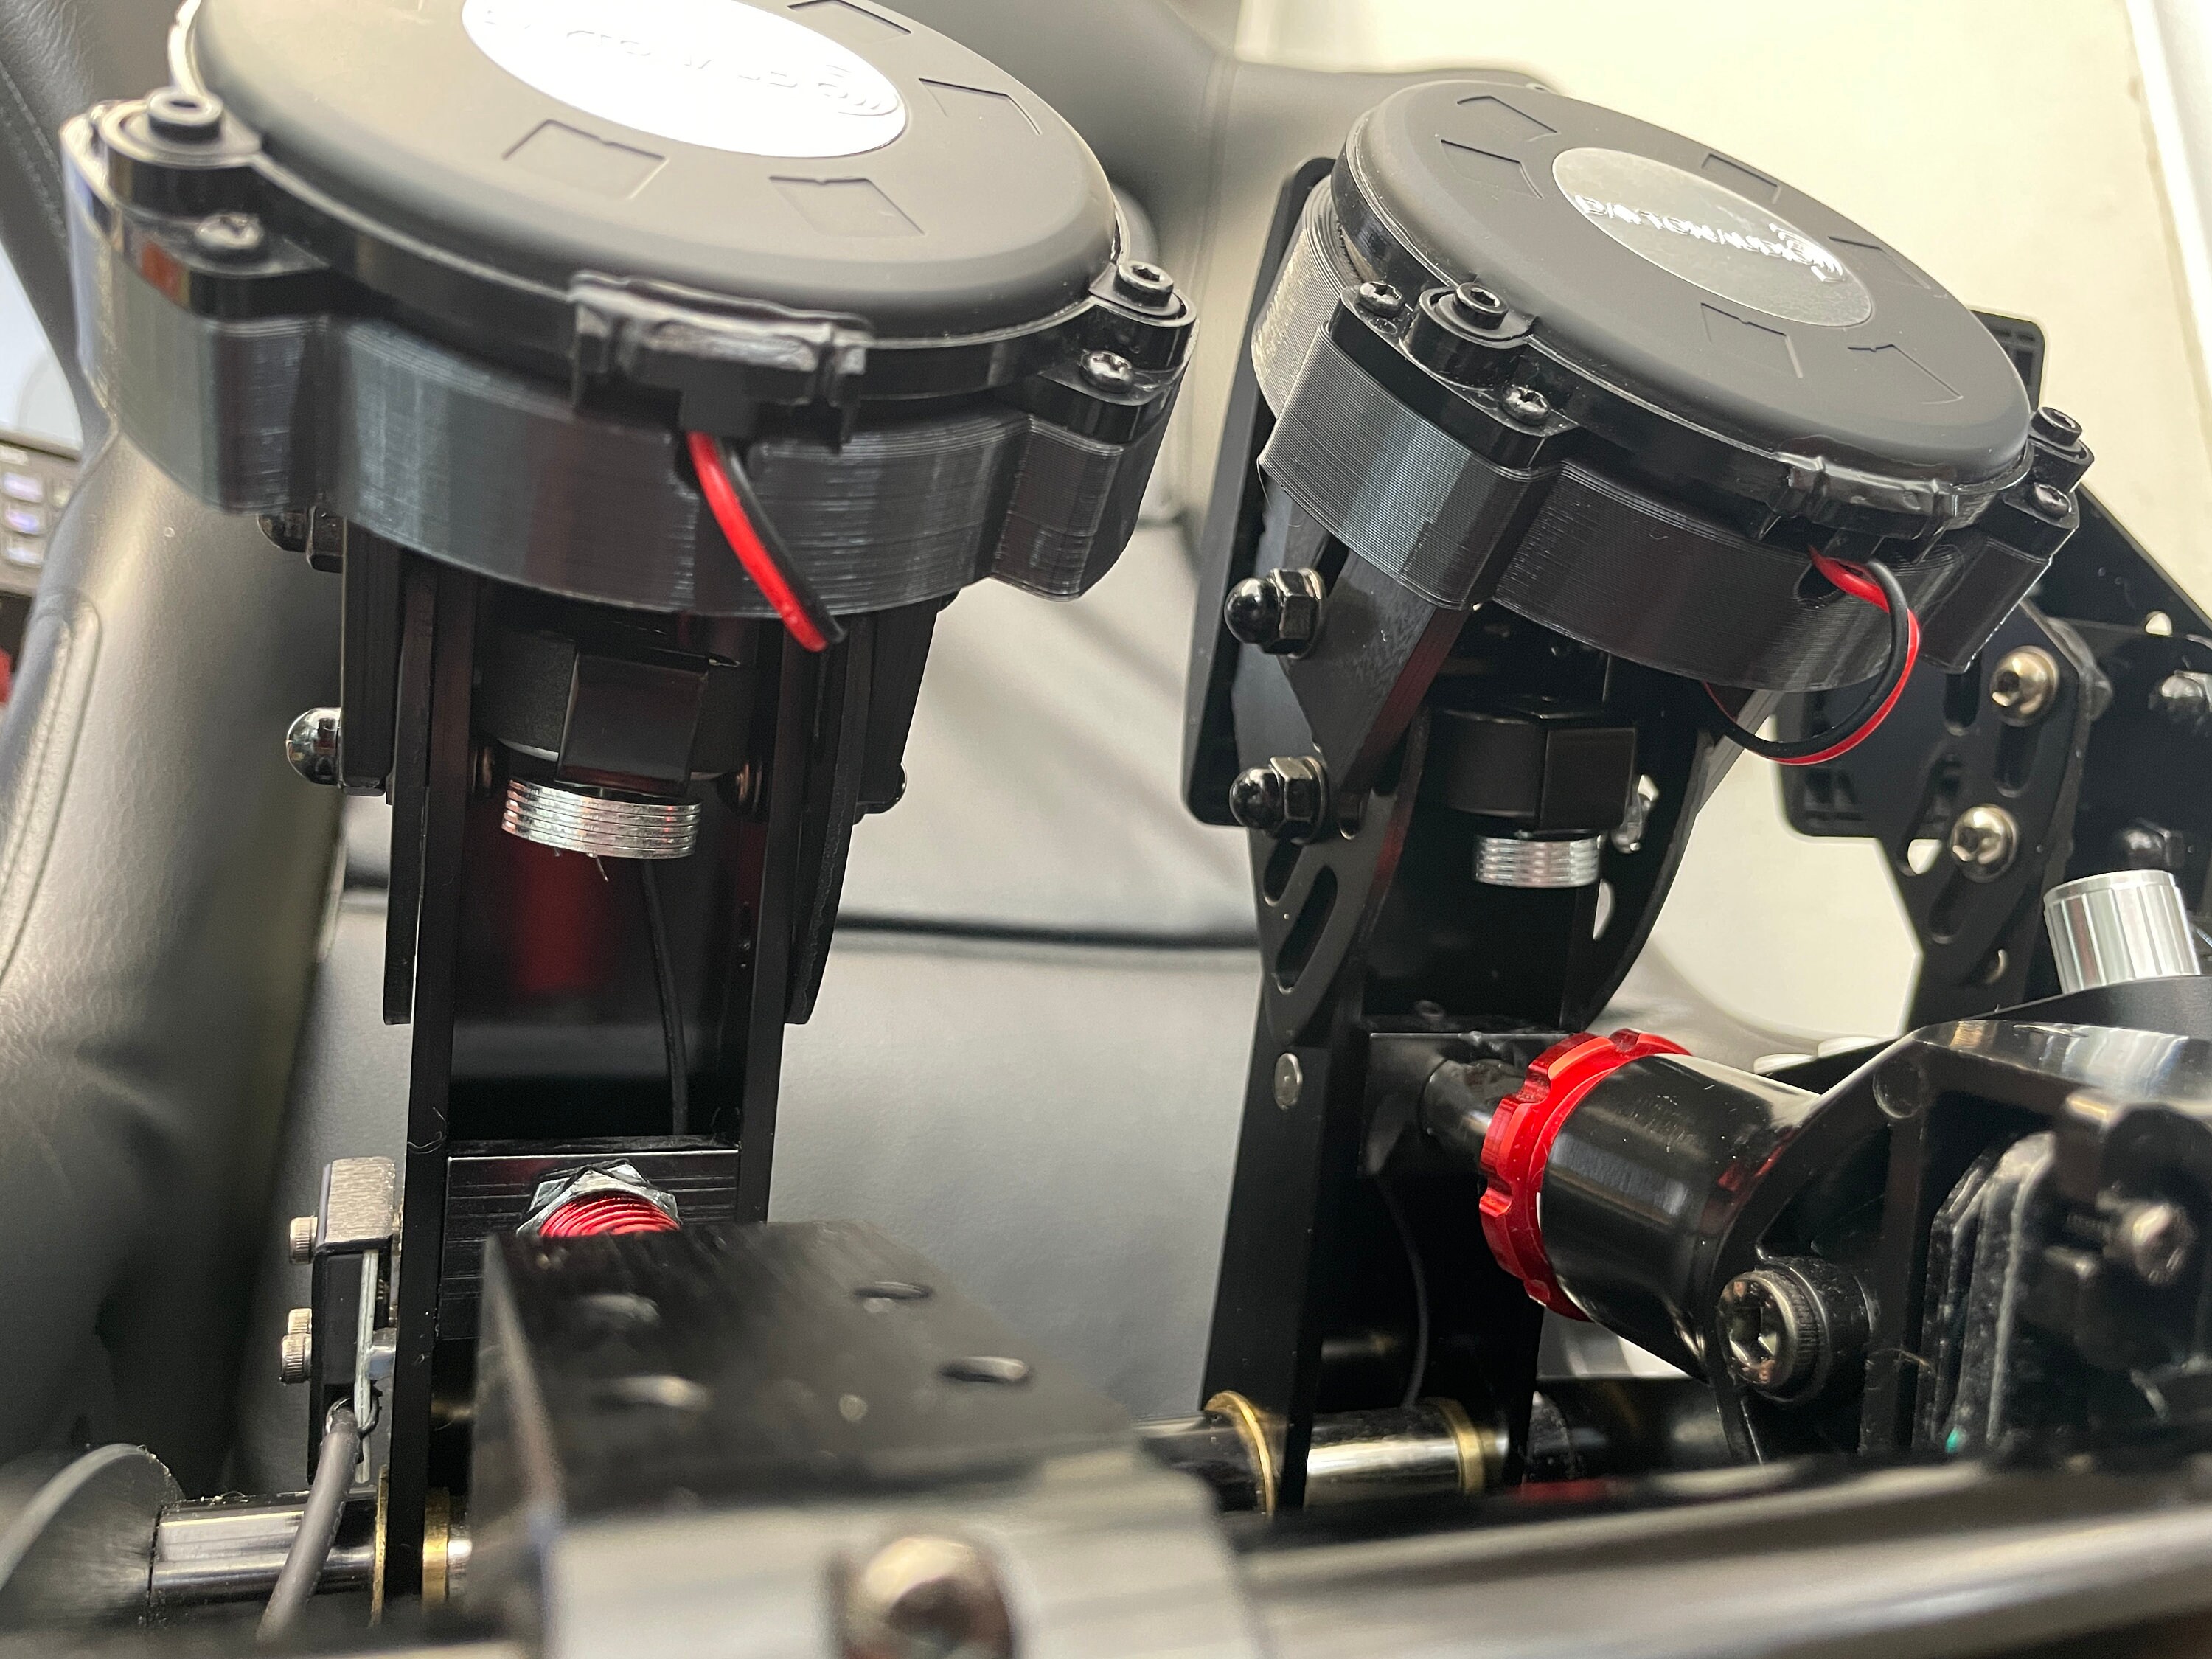 Dayton TT25 Bass Shaker Mounts for Sim Pedals Logitech Fanatec Thrustmaster  Heusinkveld 